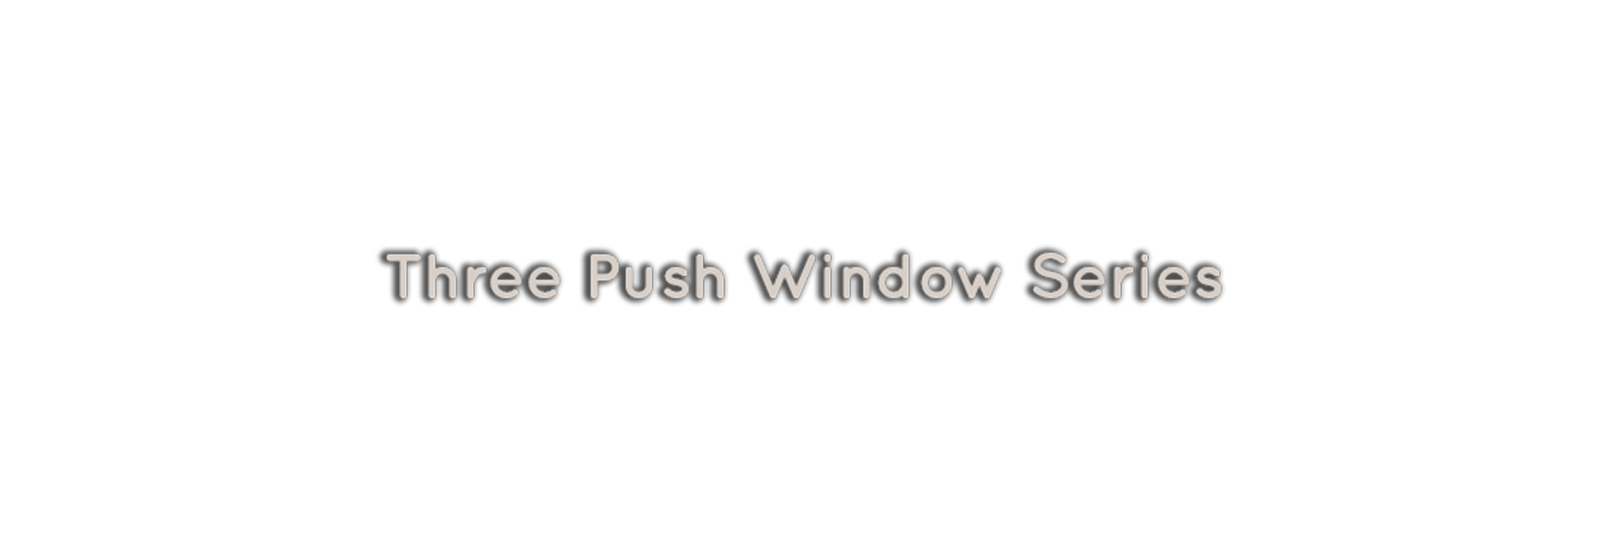 Three Push Window Series